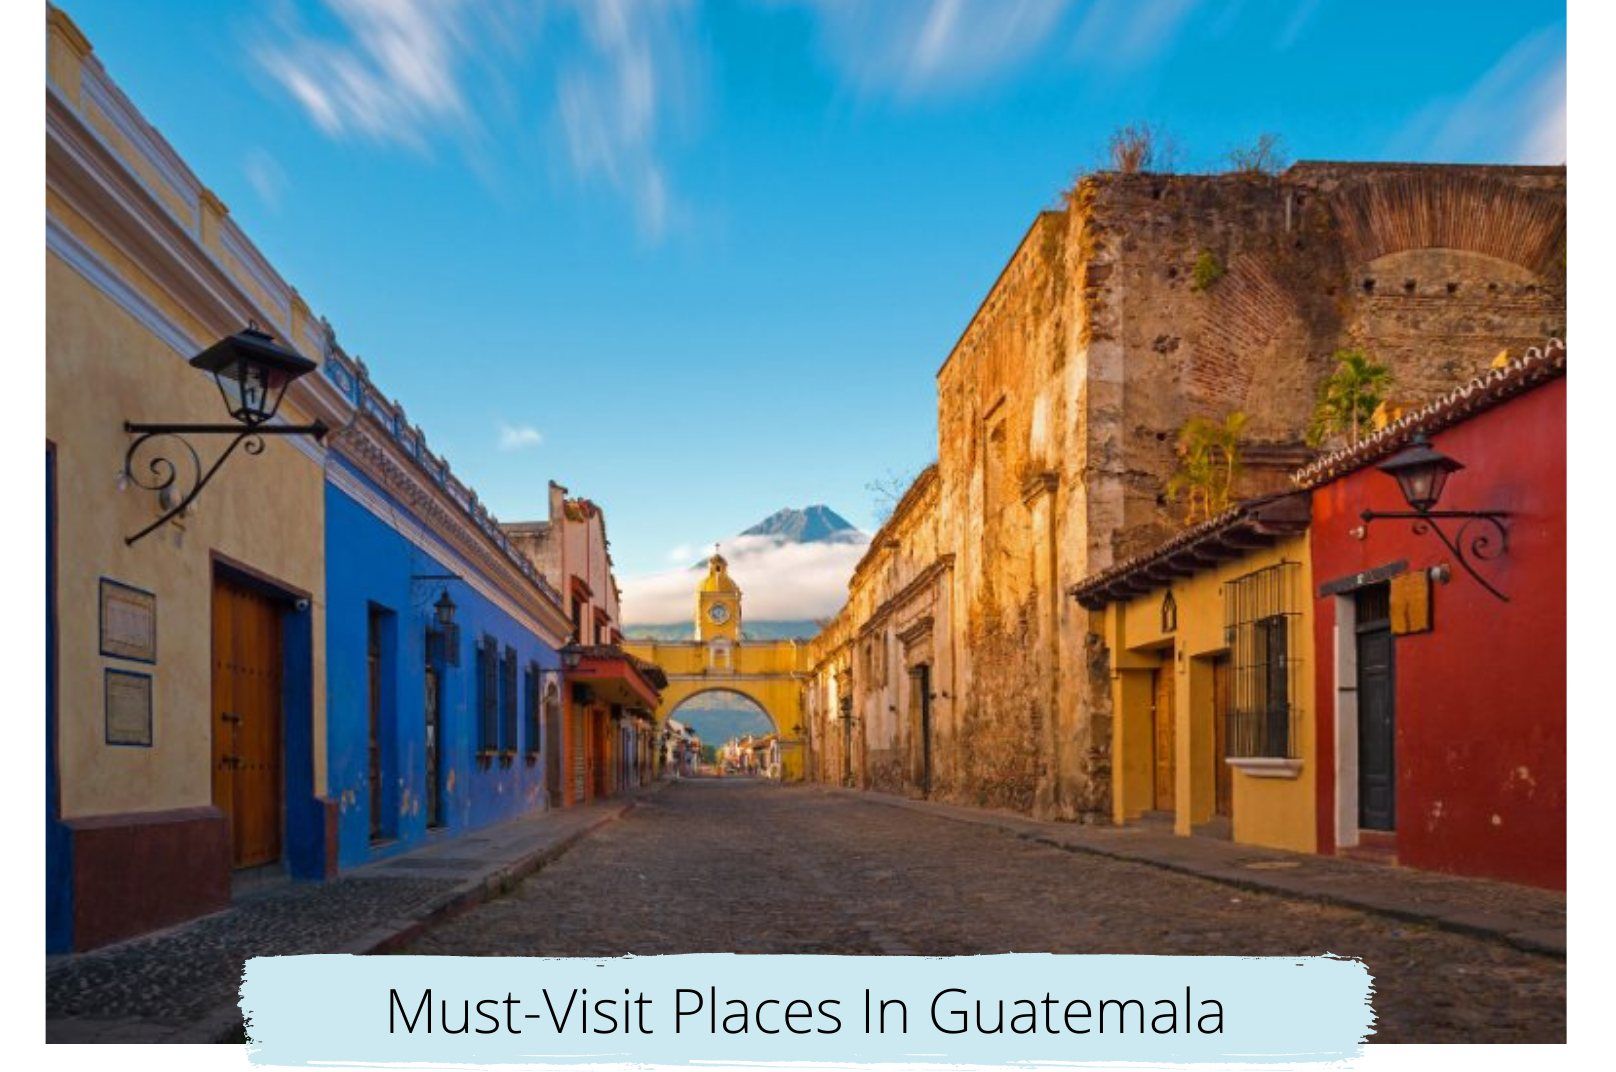 Guatemala travel guide